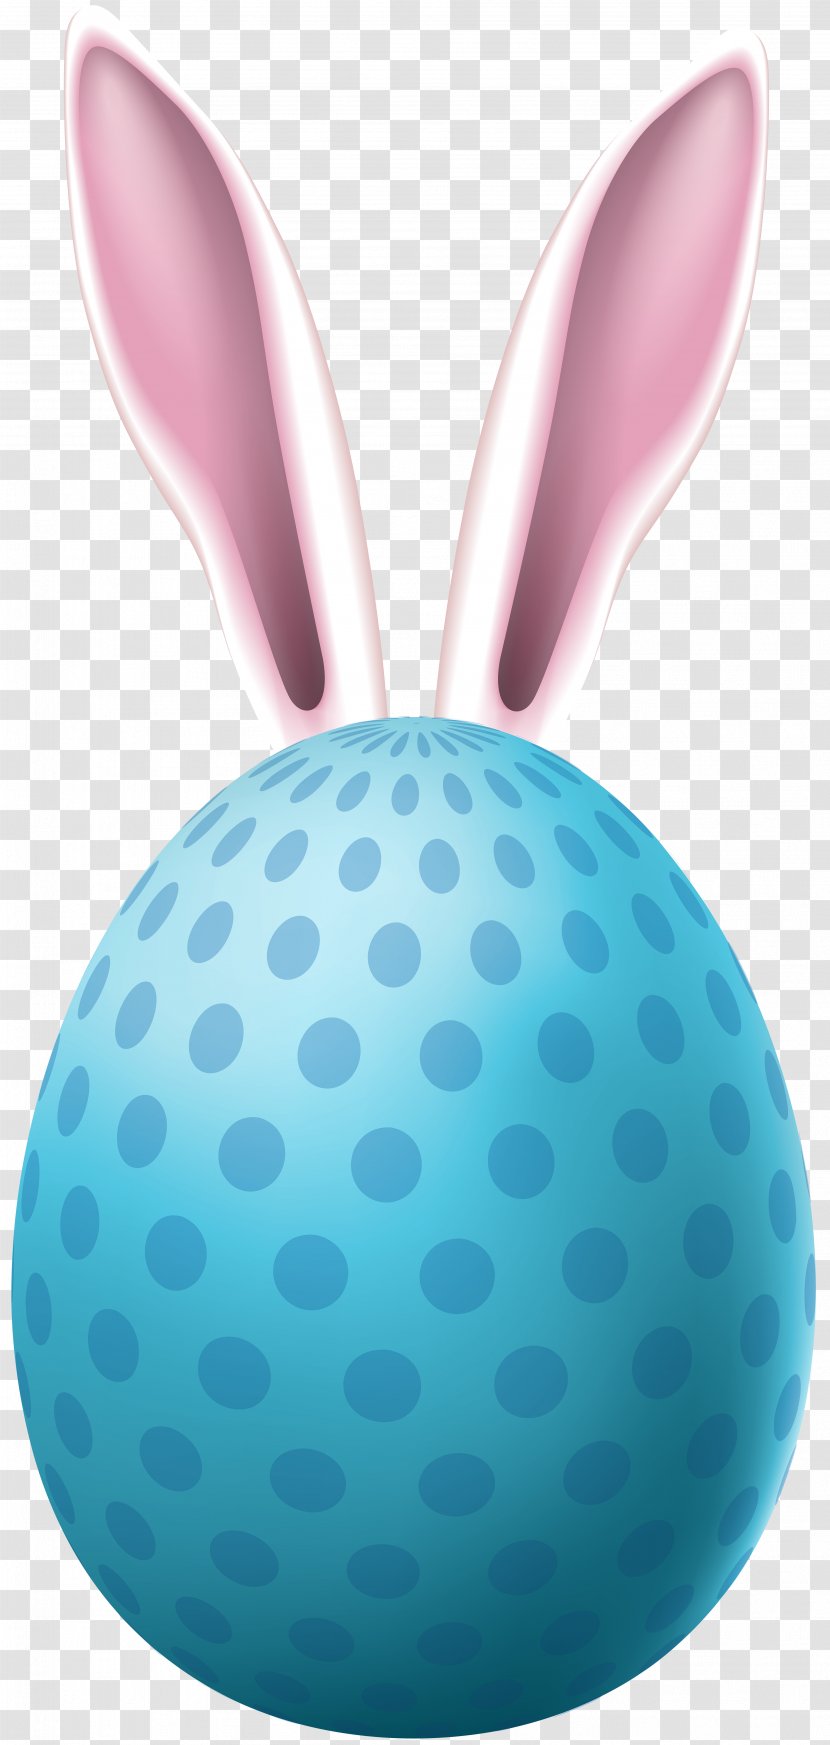 Rabbit Easter Bunny Egg Clip Art - Christmas - Pink Ears Transparent PNG